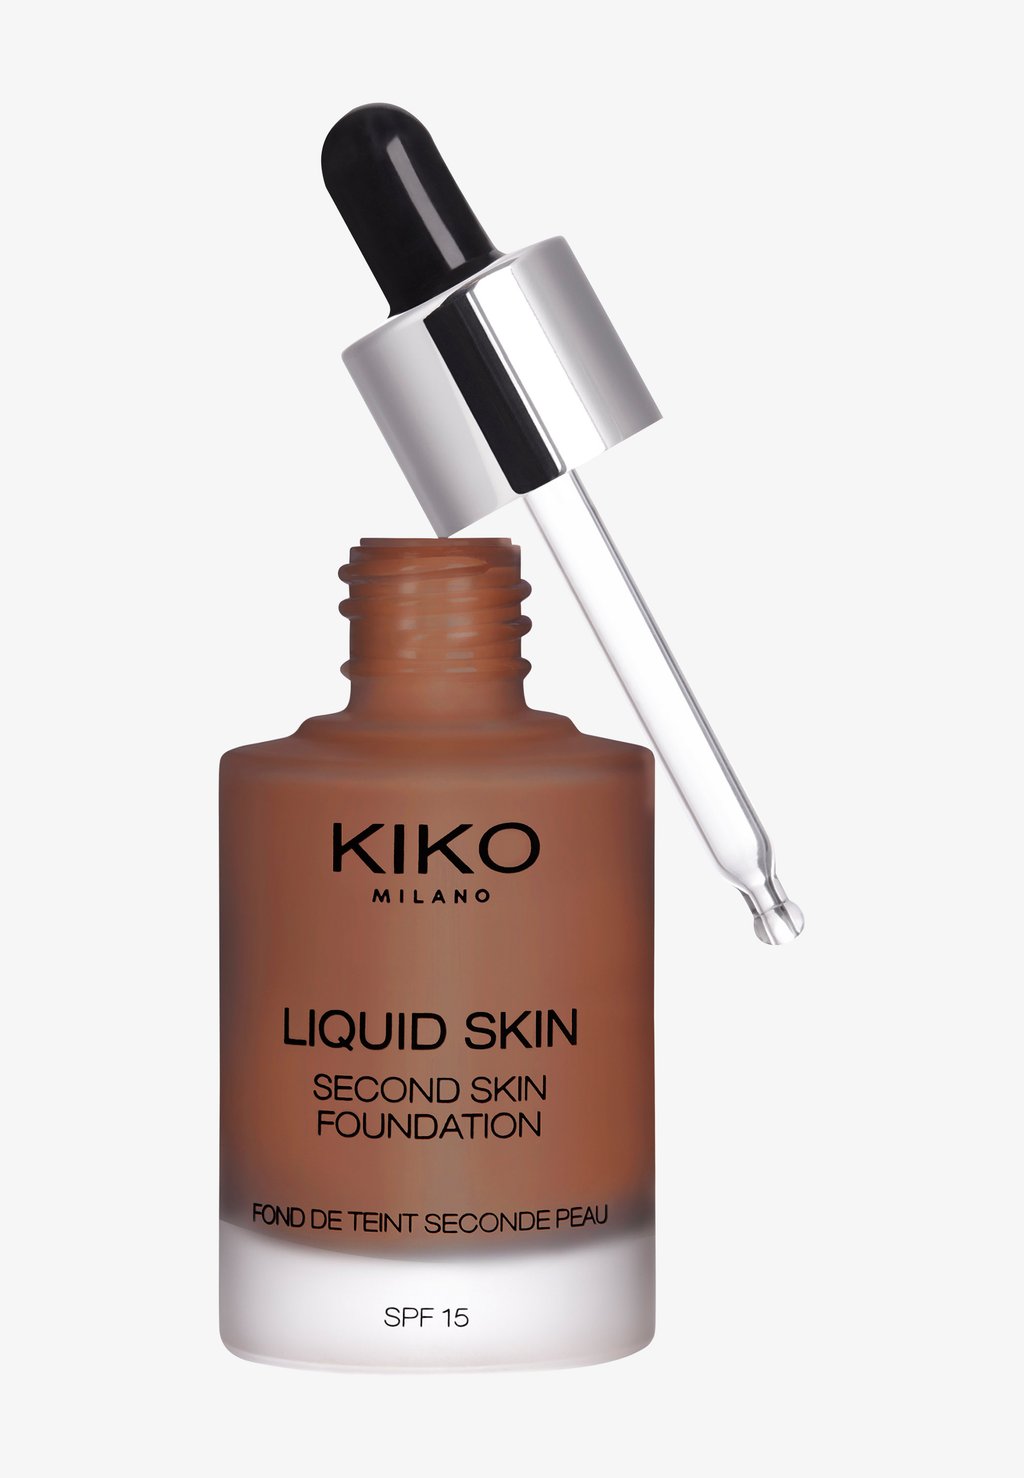 Тональный крем Liquid Skin Second Skin Foundation KIKO Milano, цвет 200 neutral